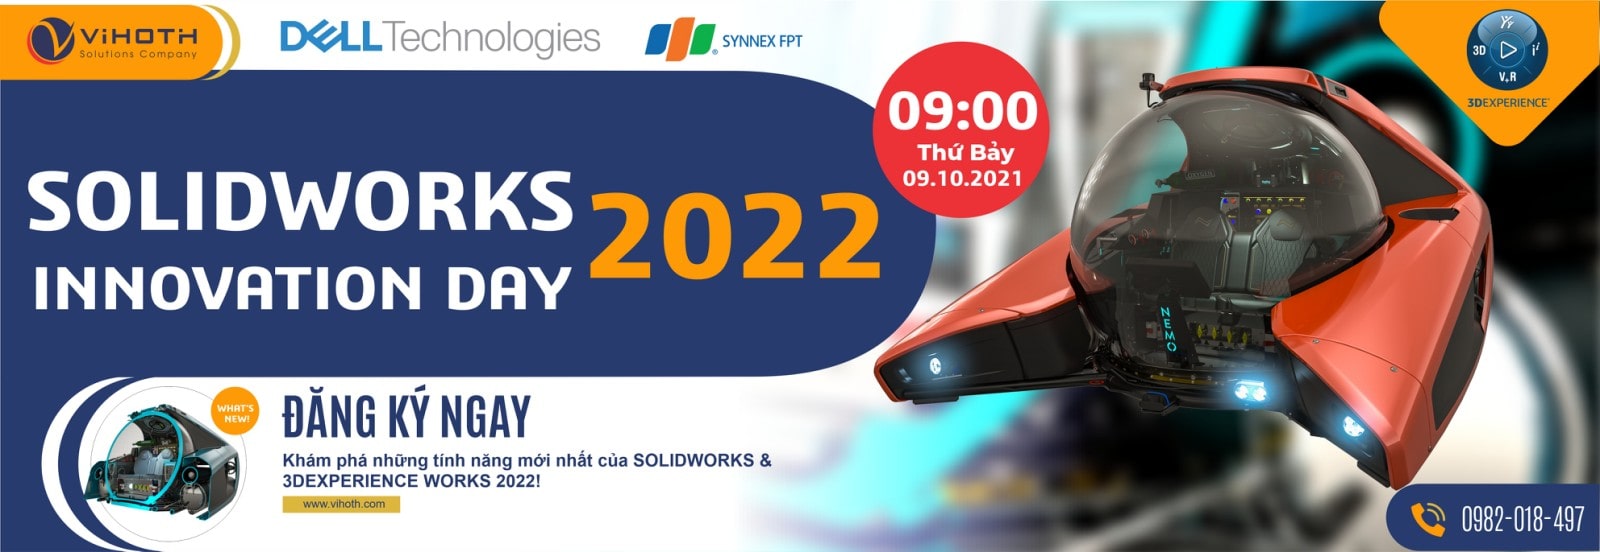 solidworks-innovationday-2022-vihoth-banner